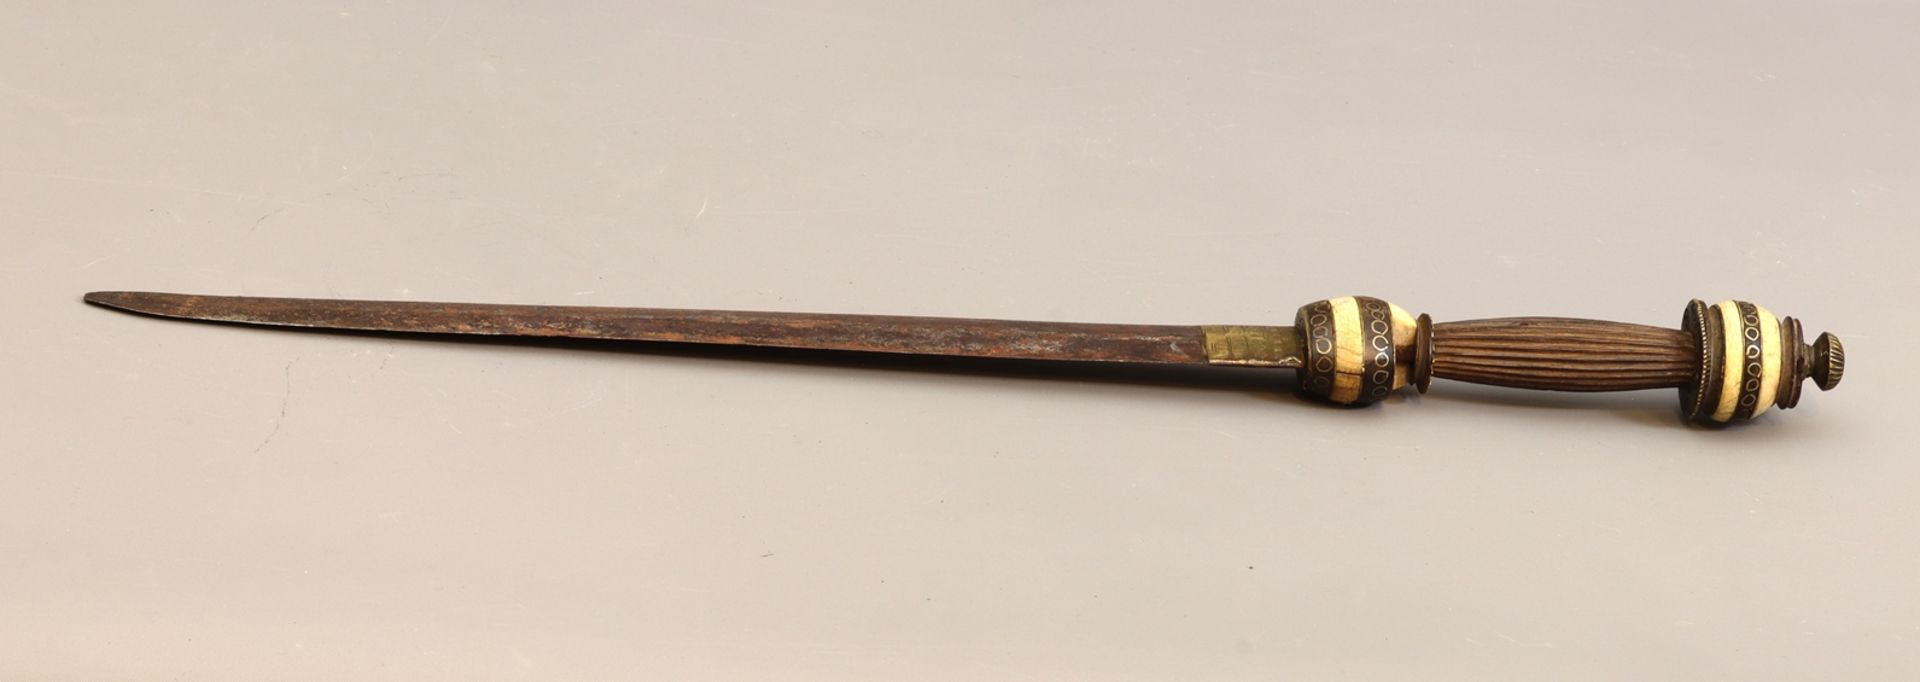 African ritual dagger, 19th century, North Africa